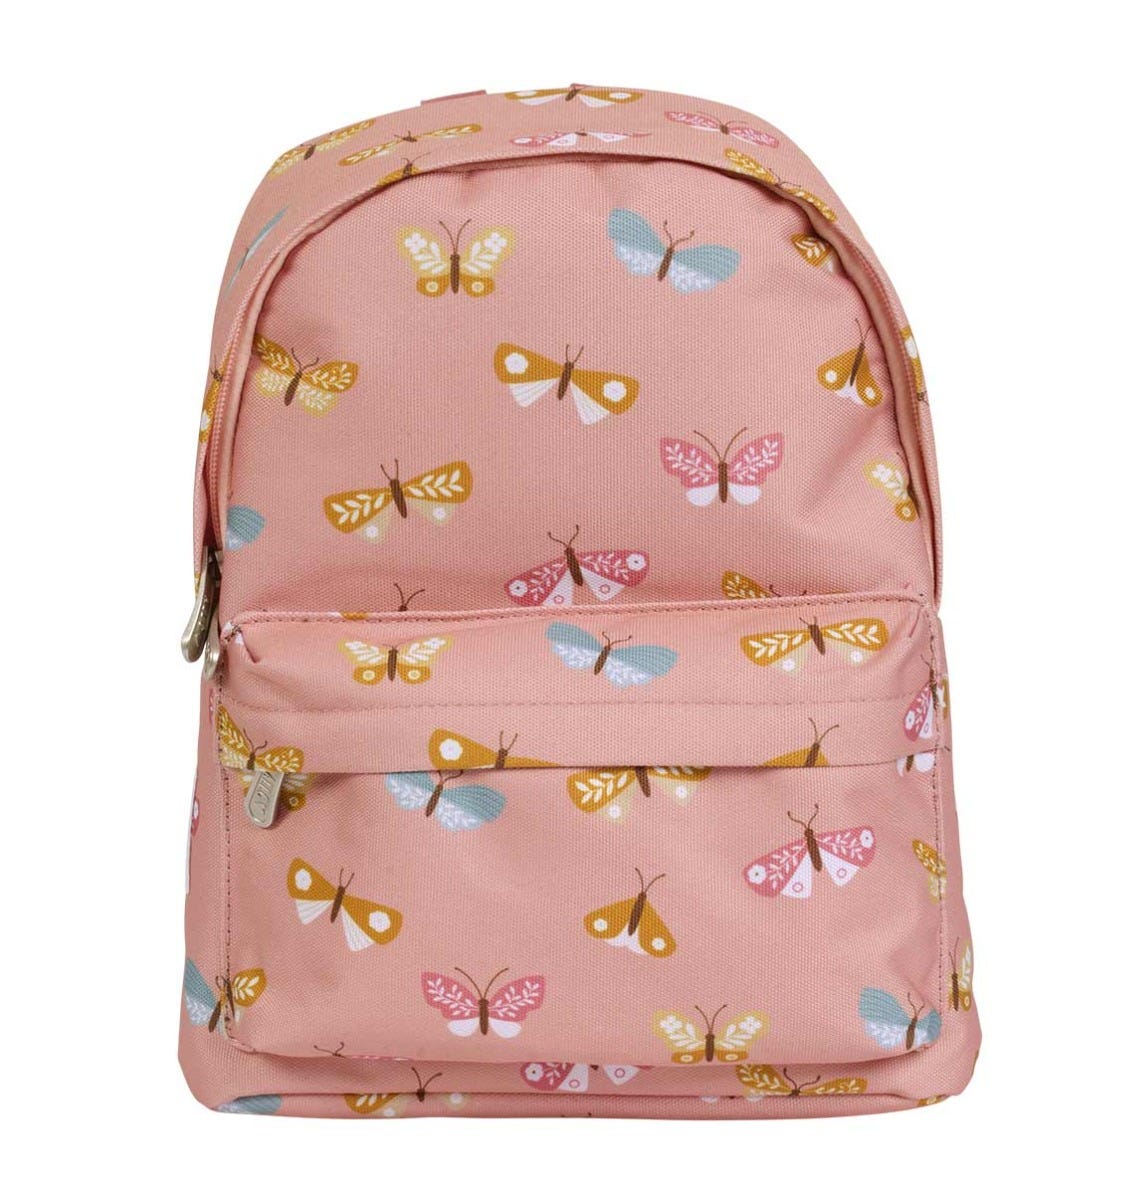 A LITTLE LOVELY COMPANY - Little backpack - Butterflies